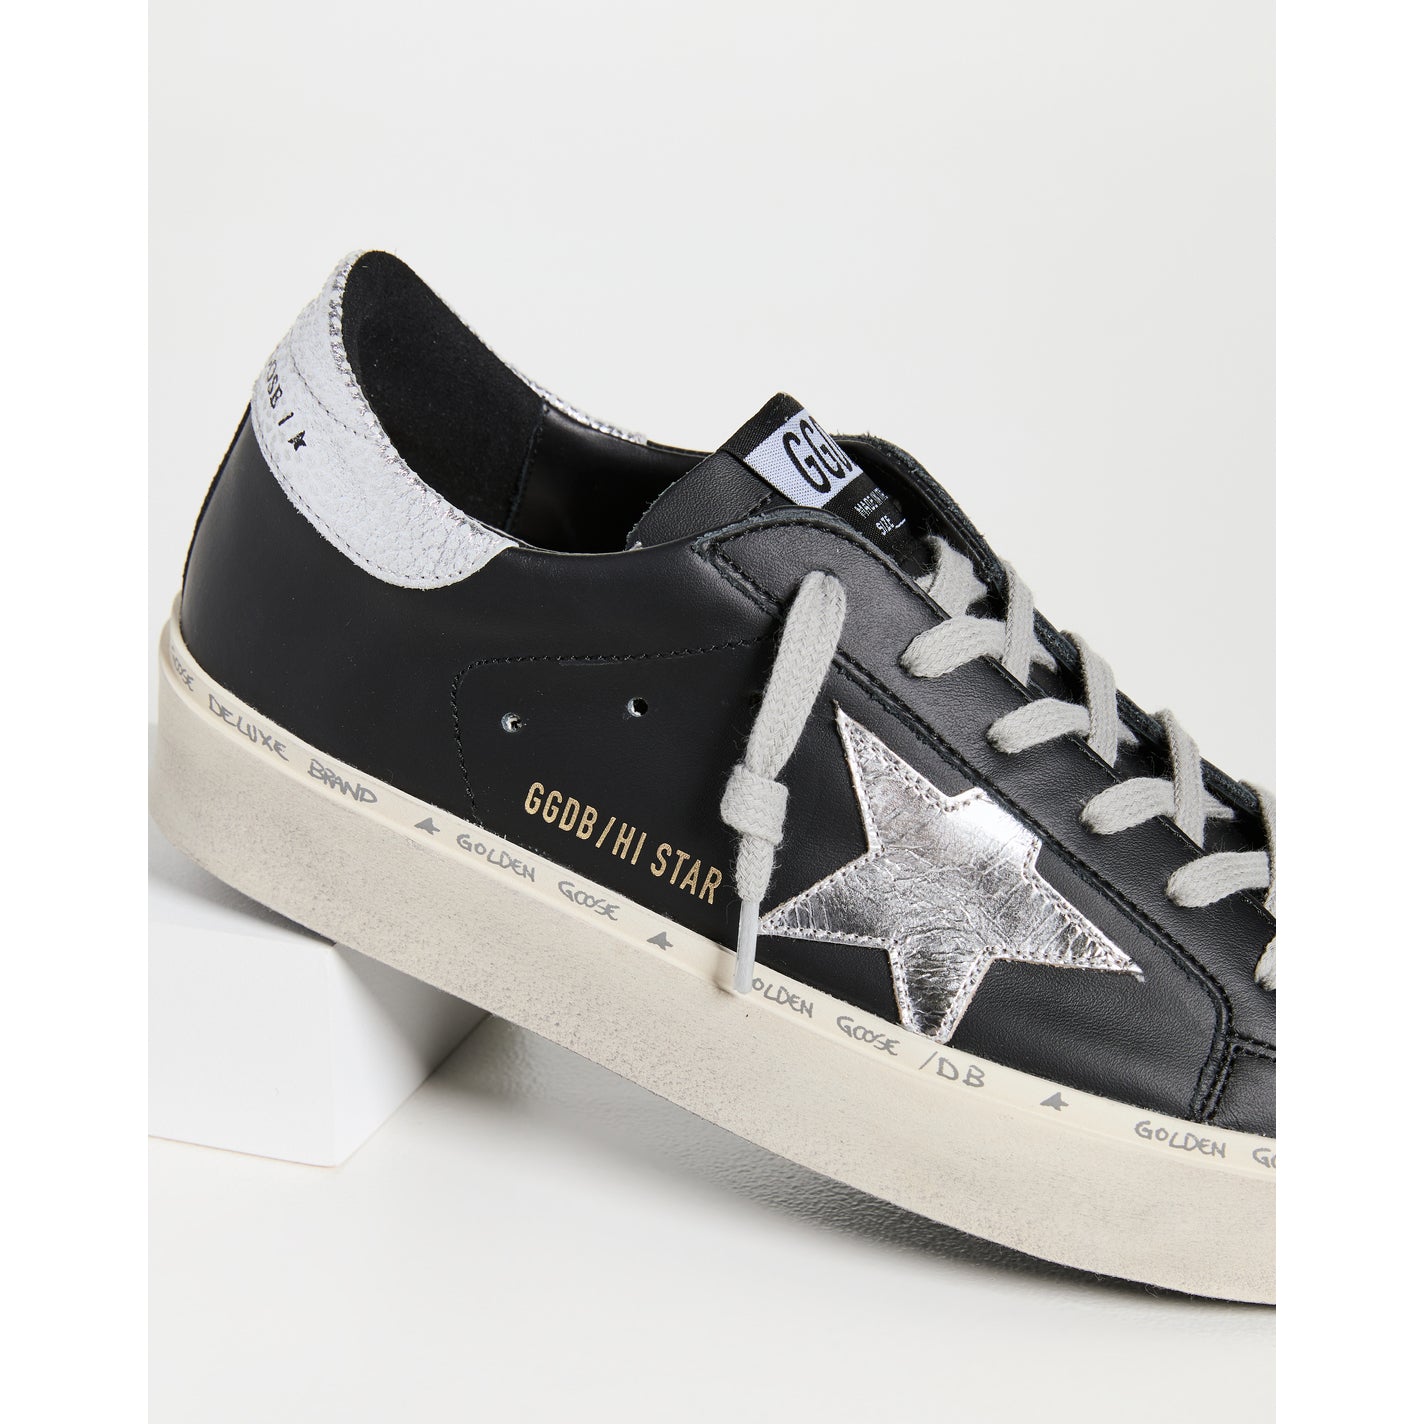 Golden Goose Hi-Star Black Sneakers, size 36